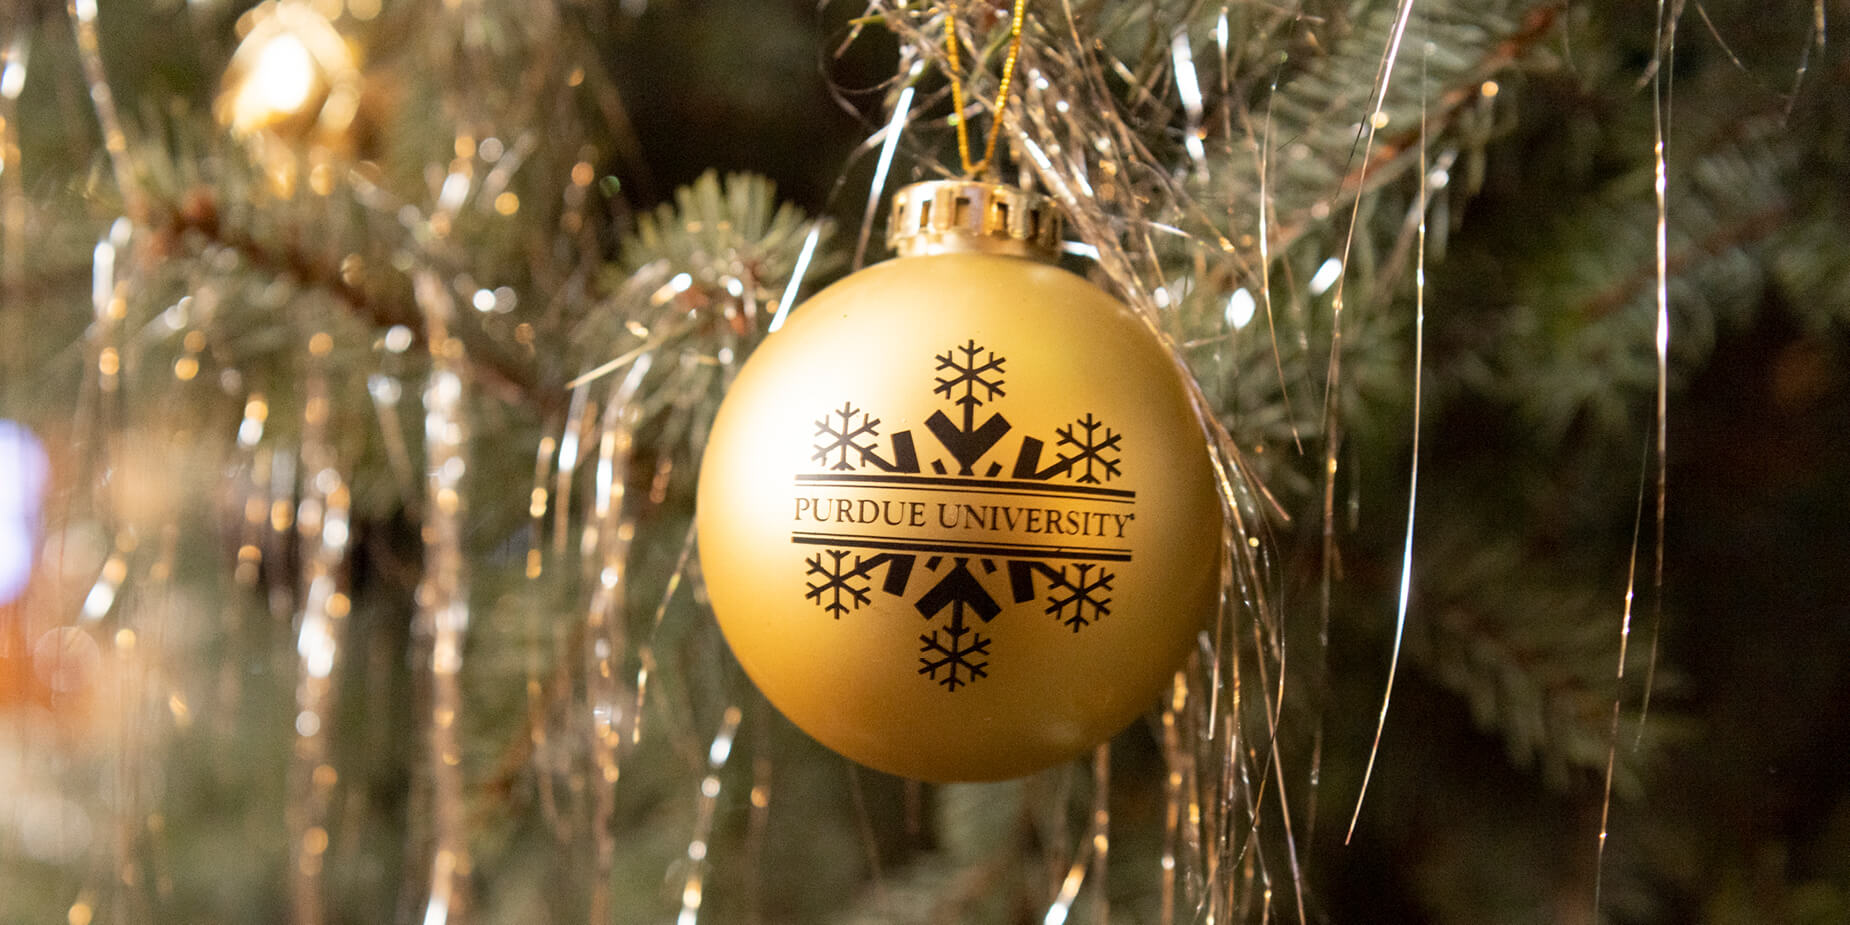 A Purdue University ornament hangs from the PMU Christmas tree